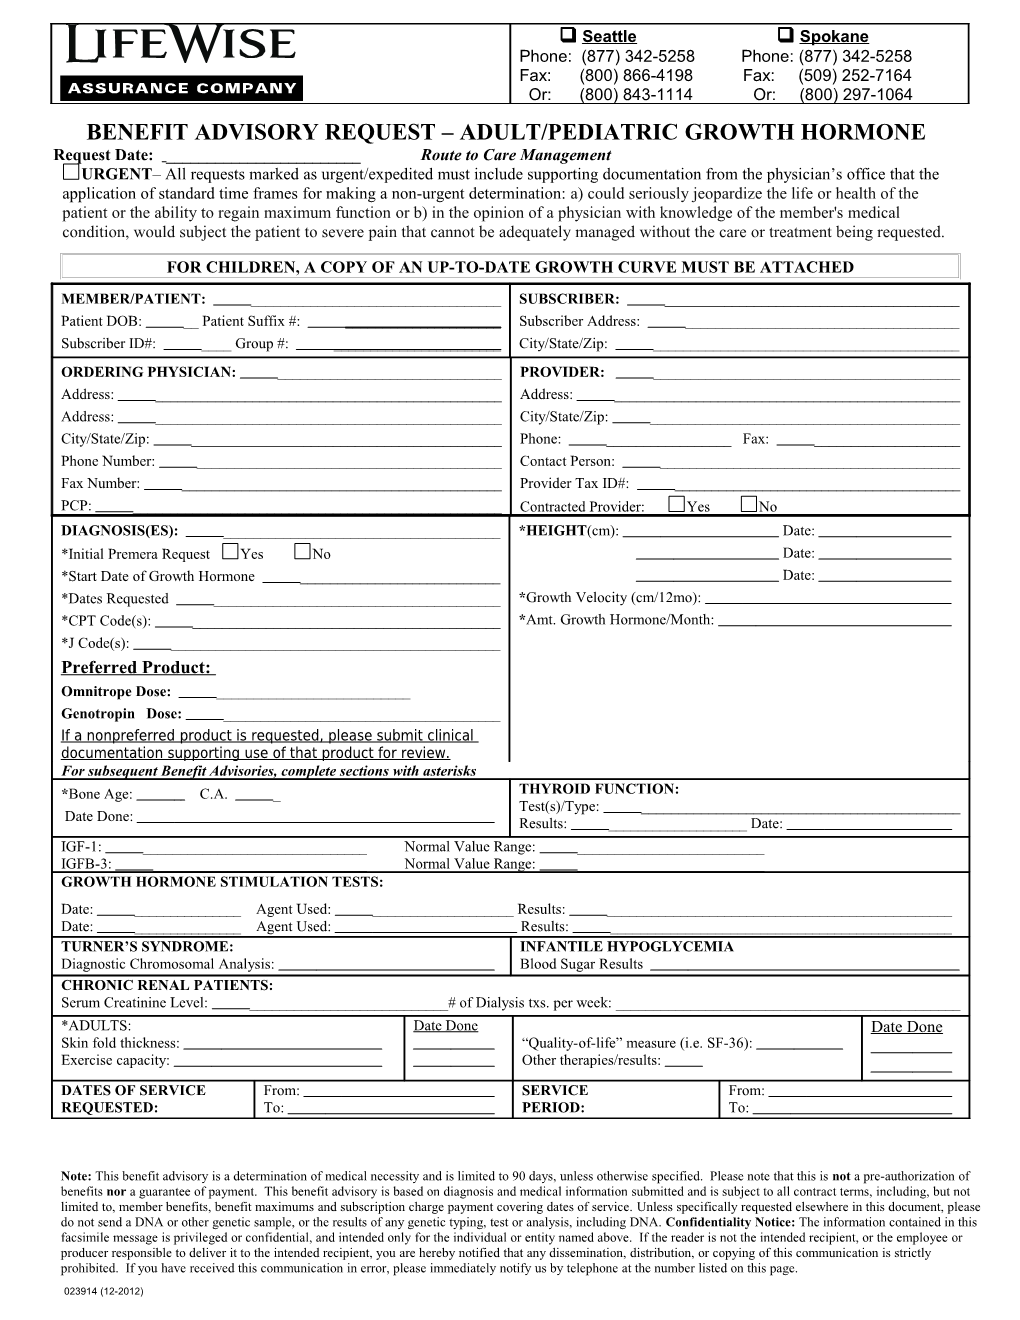 Practitioner Prior Authorization Form